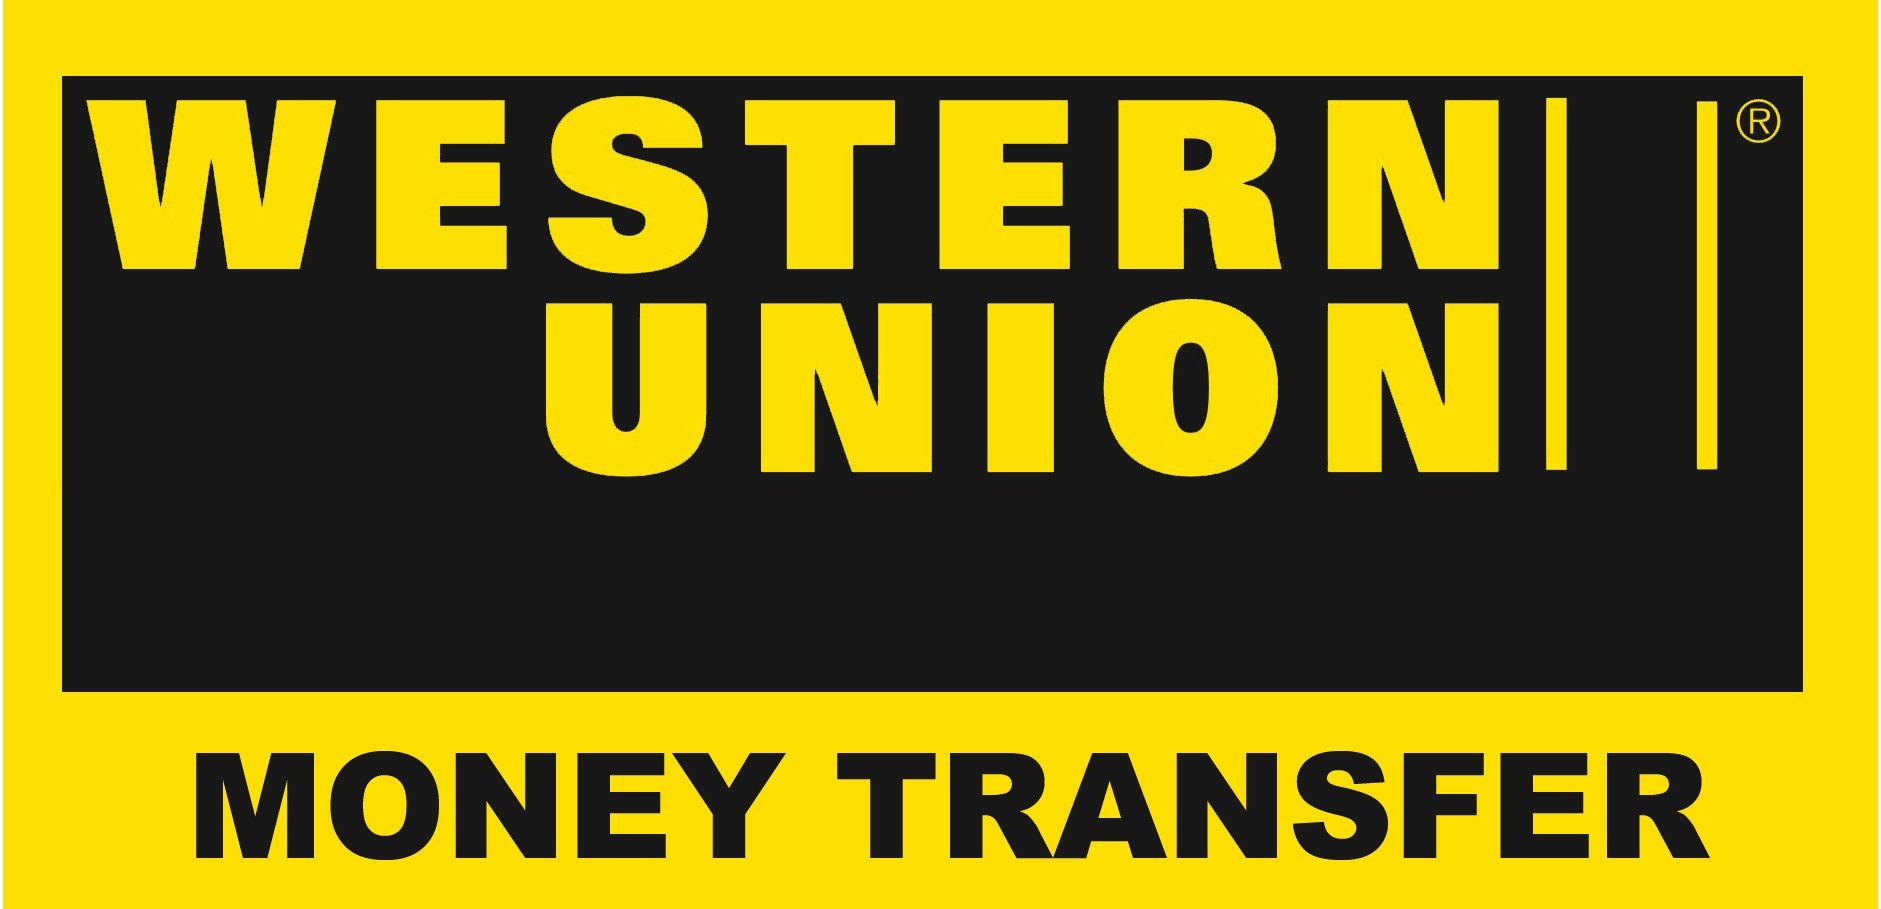 Western Union Logo - The Western Union Logo [High res] [Full color] : notinteresting